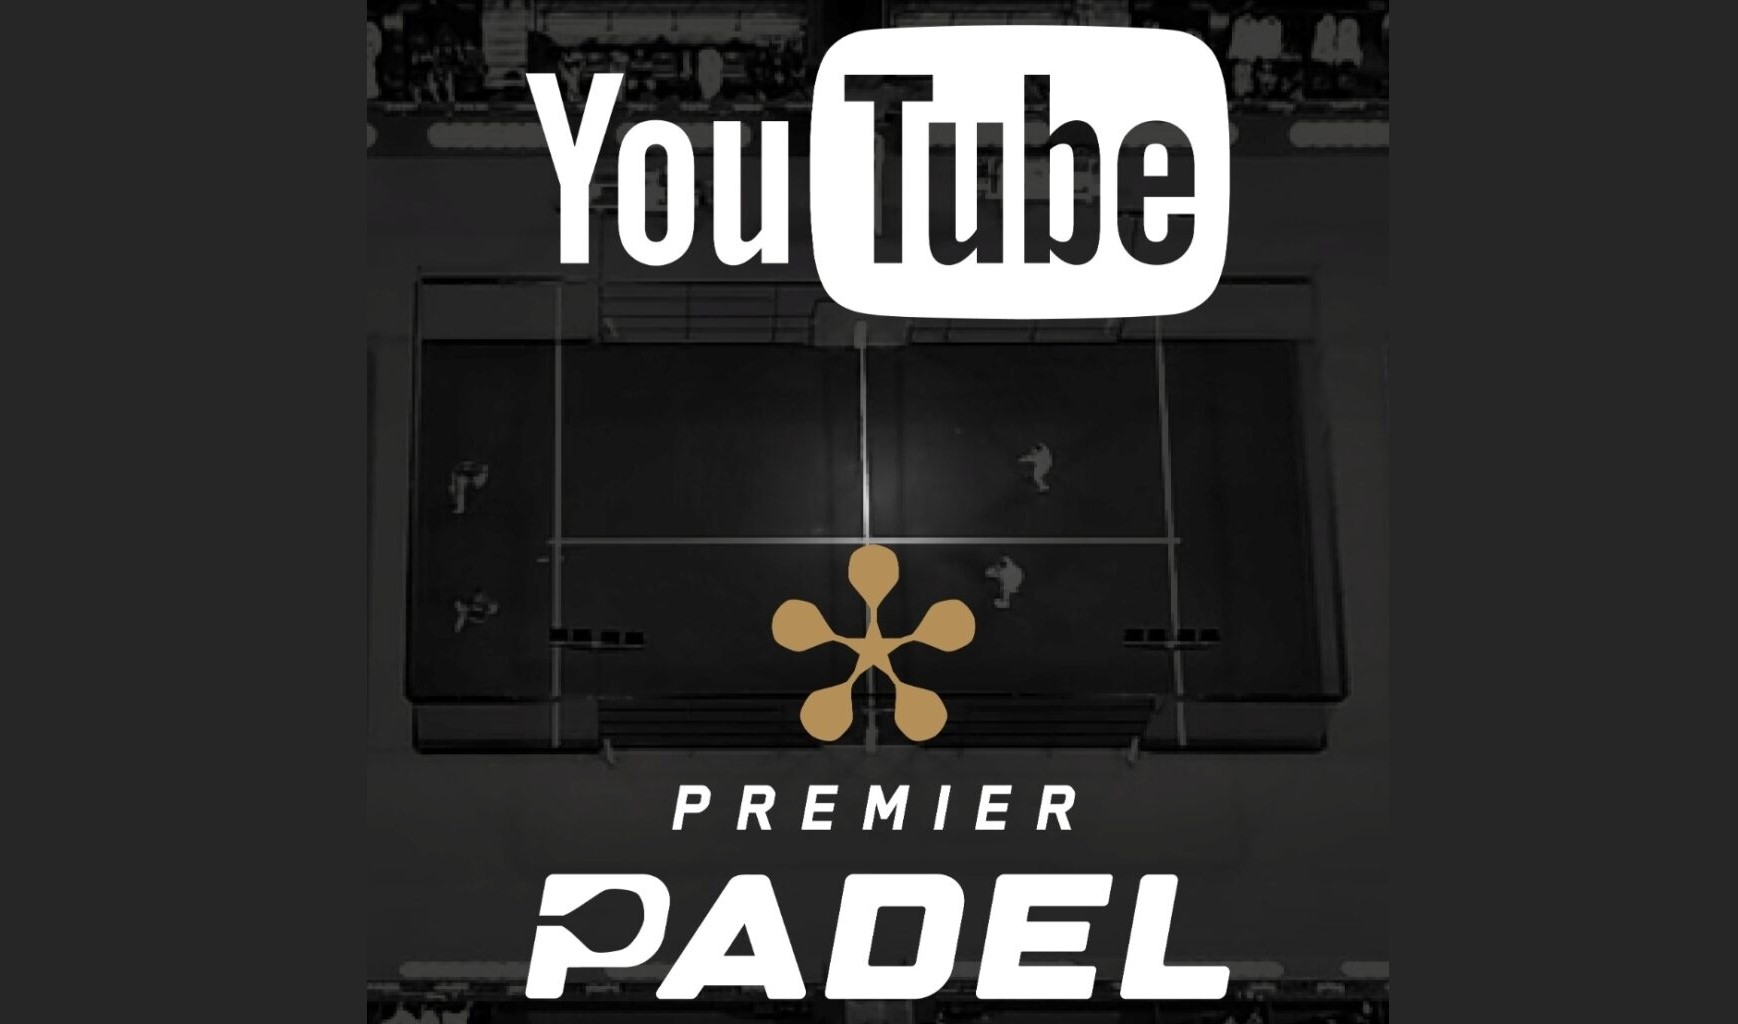 YouTube Premier Padel +2022 16 9 XNUMX